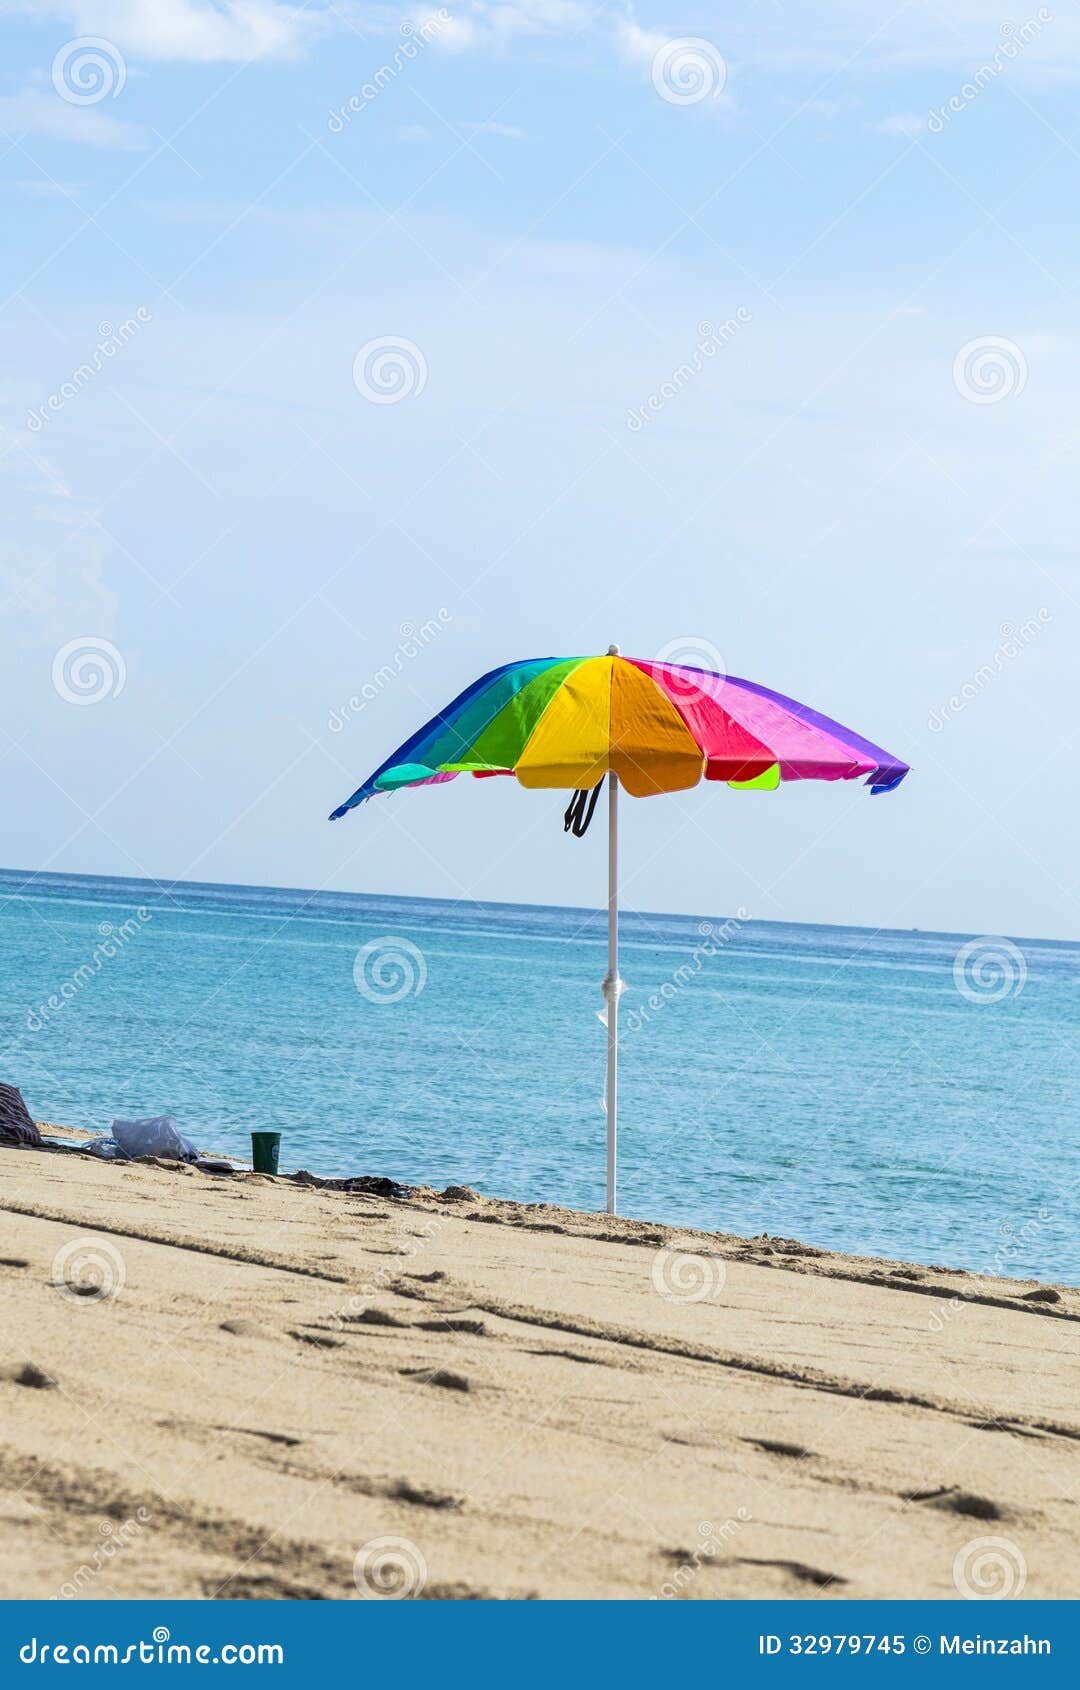 Beach Umbrella Colorful in the Sand Stock Image - Image of scene ...